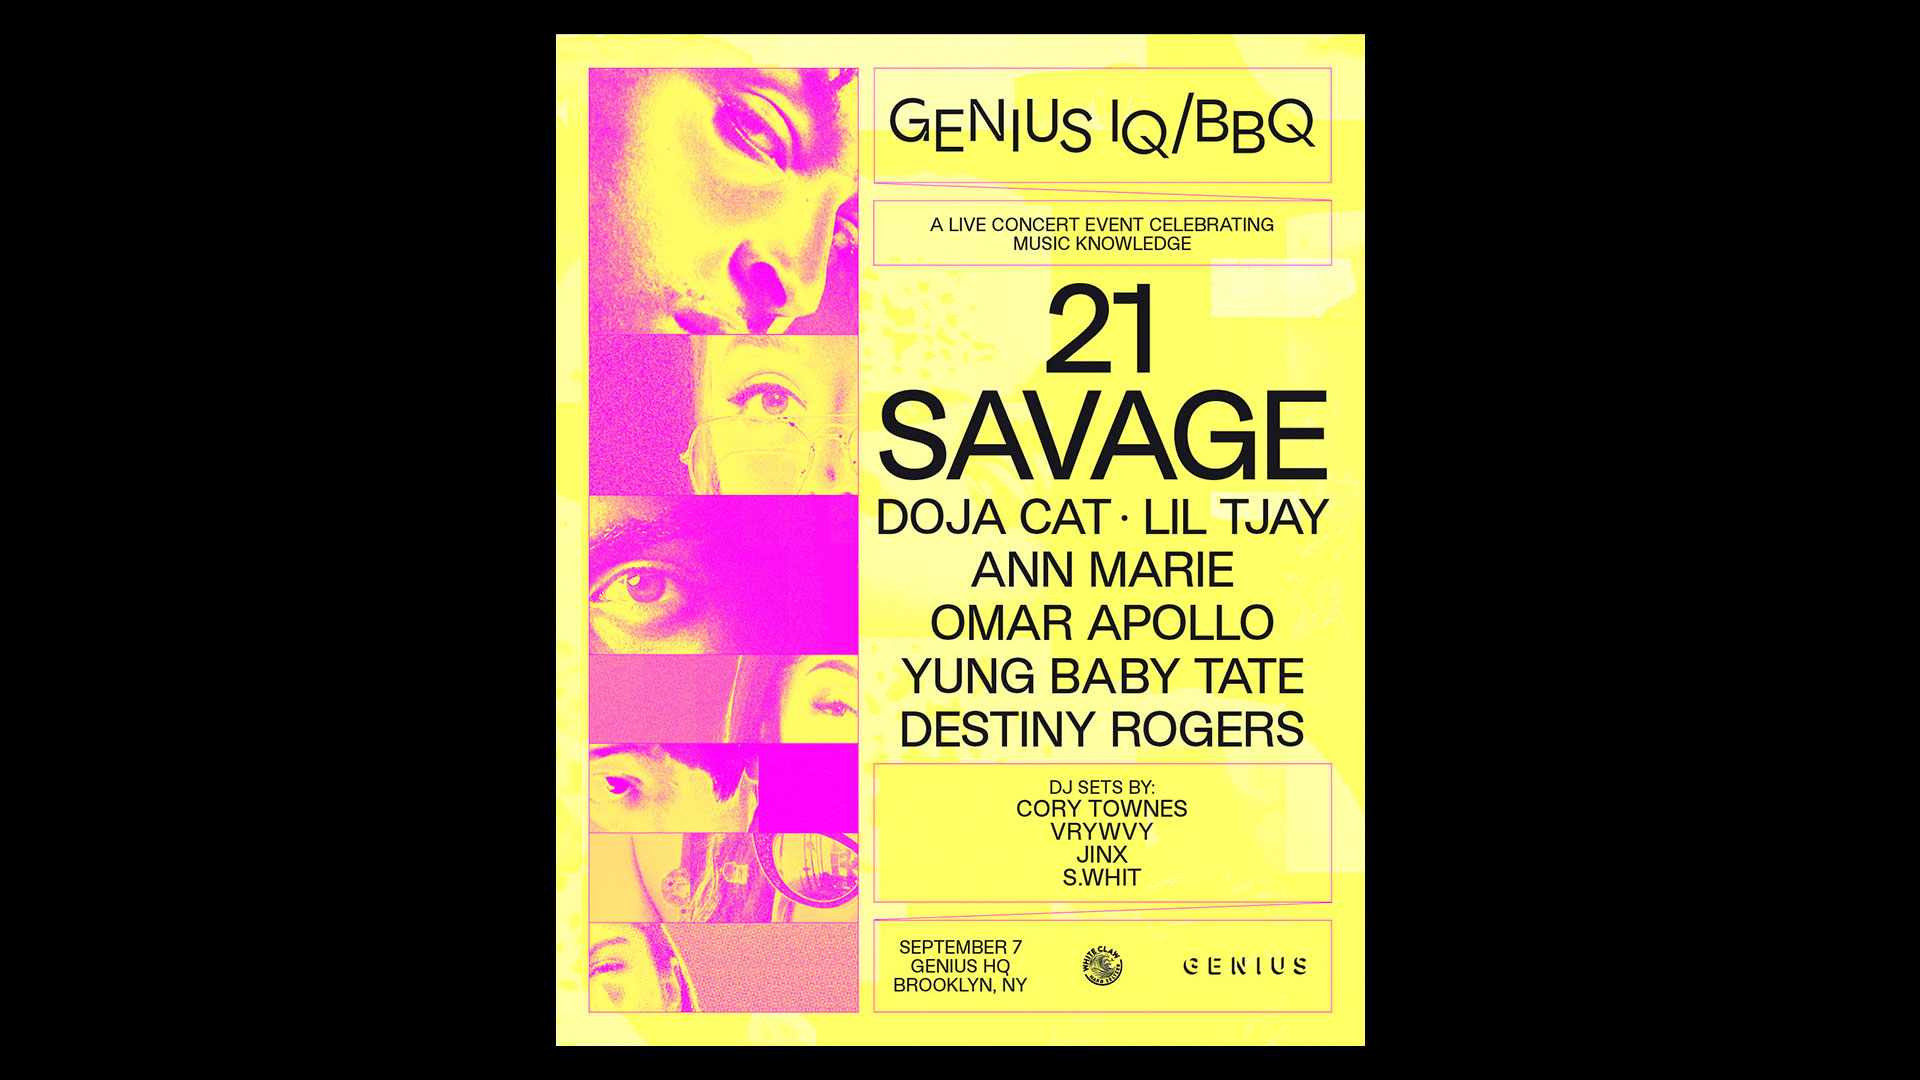 21 Savage And Doja Cat Close Out Summer 2019 At Genius' IQ/BBQ